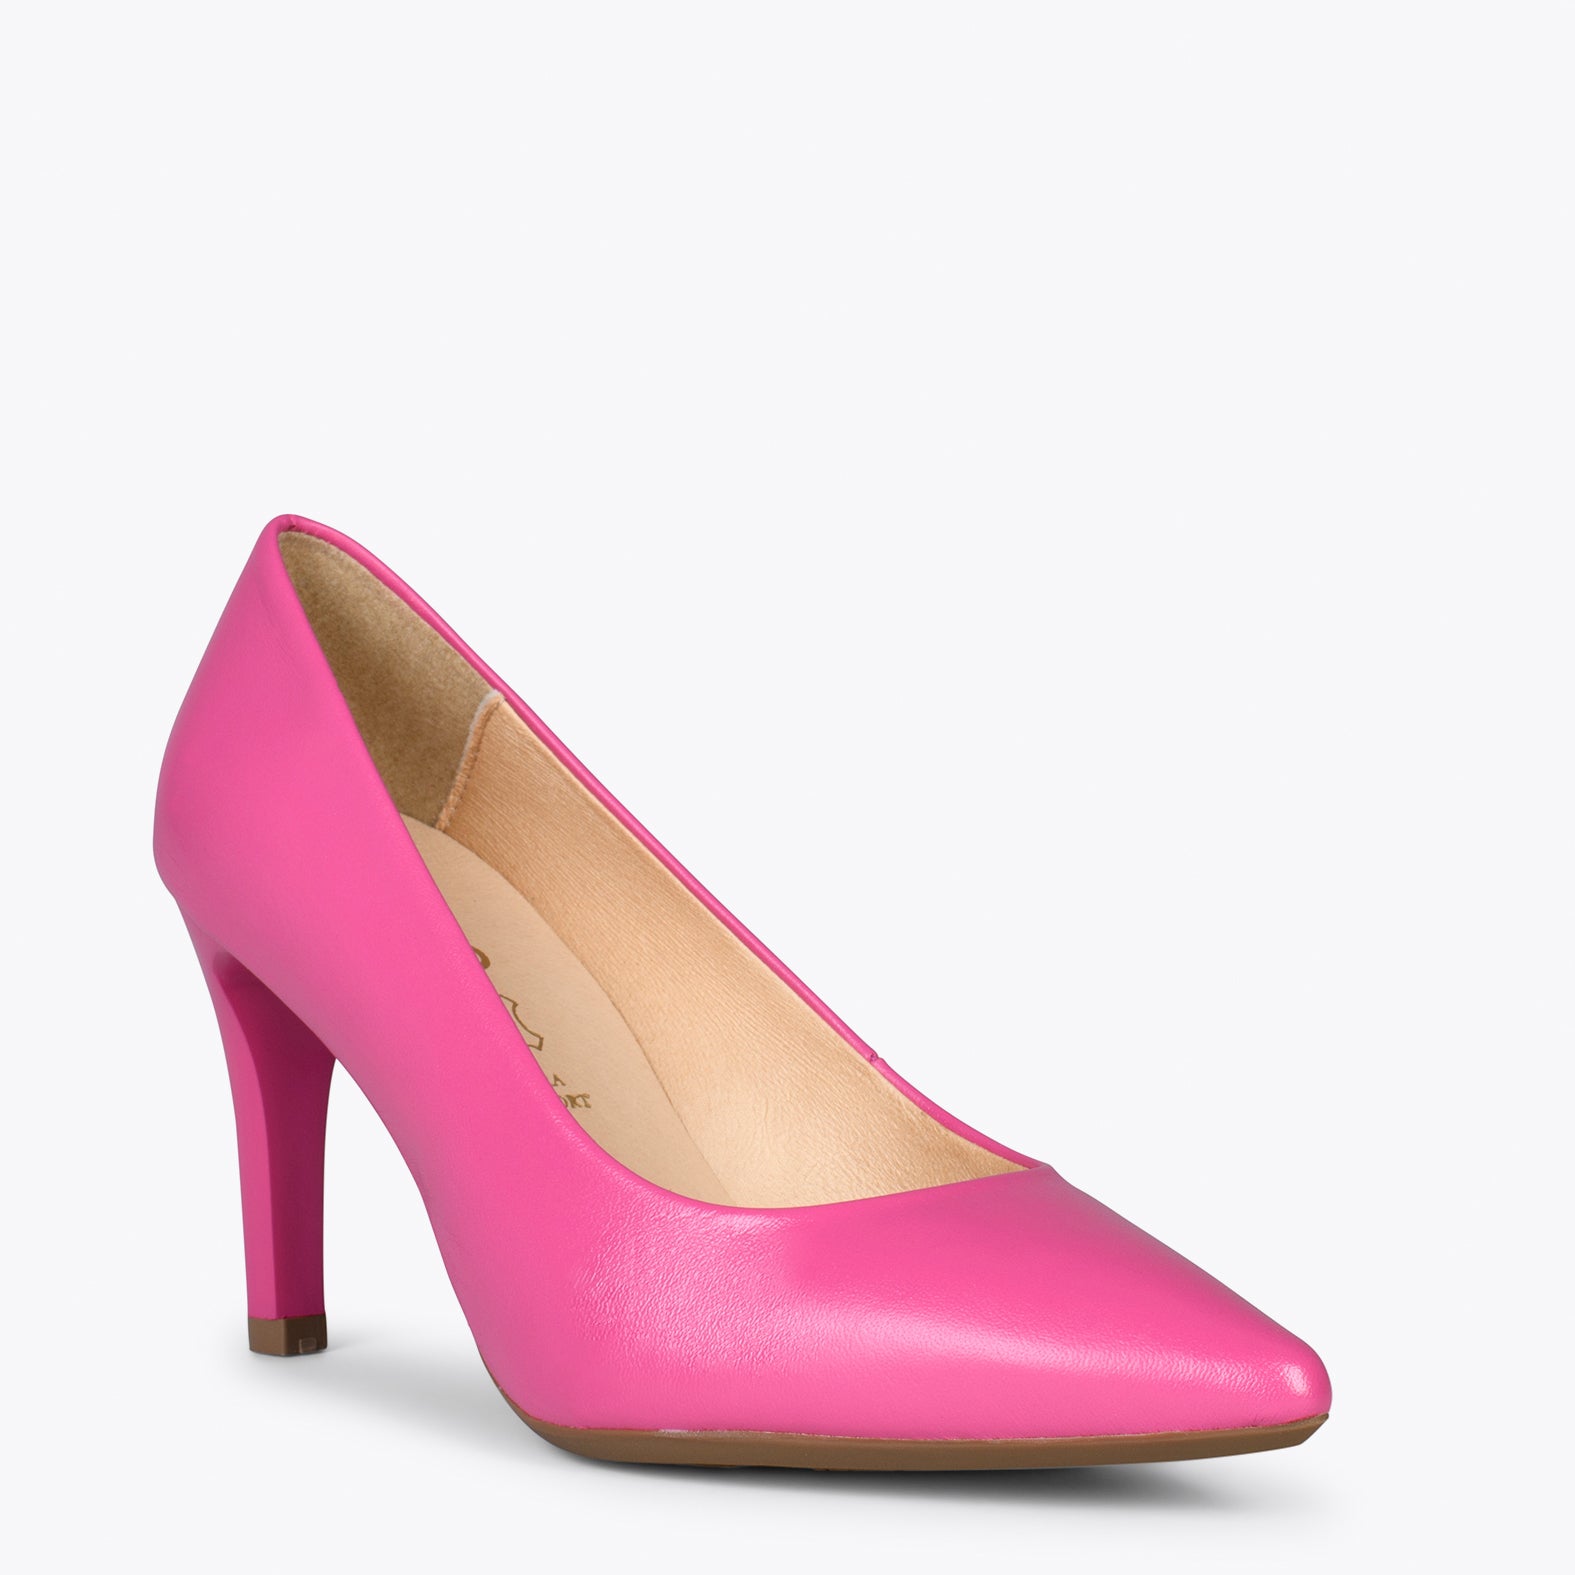 GLAM – FUCHSIA elegant high heels